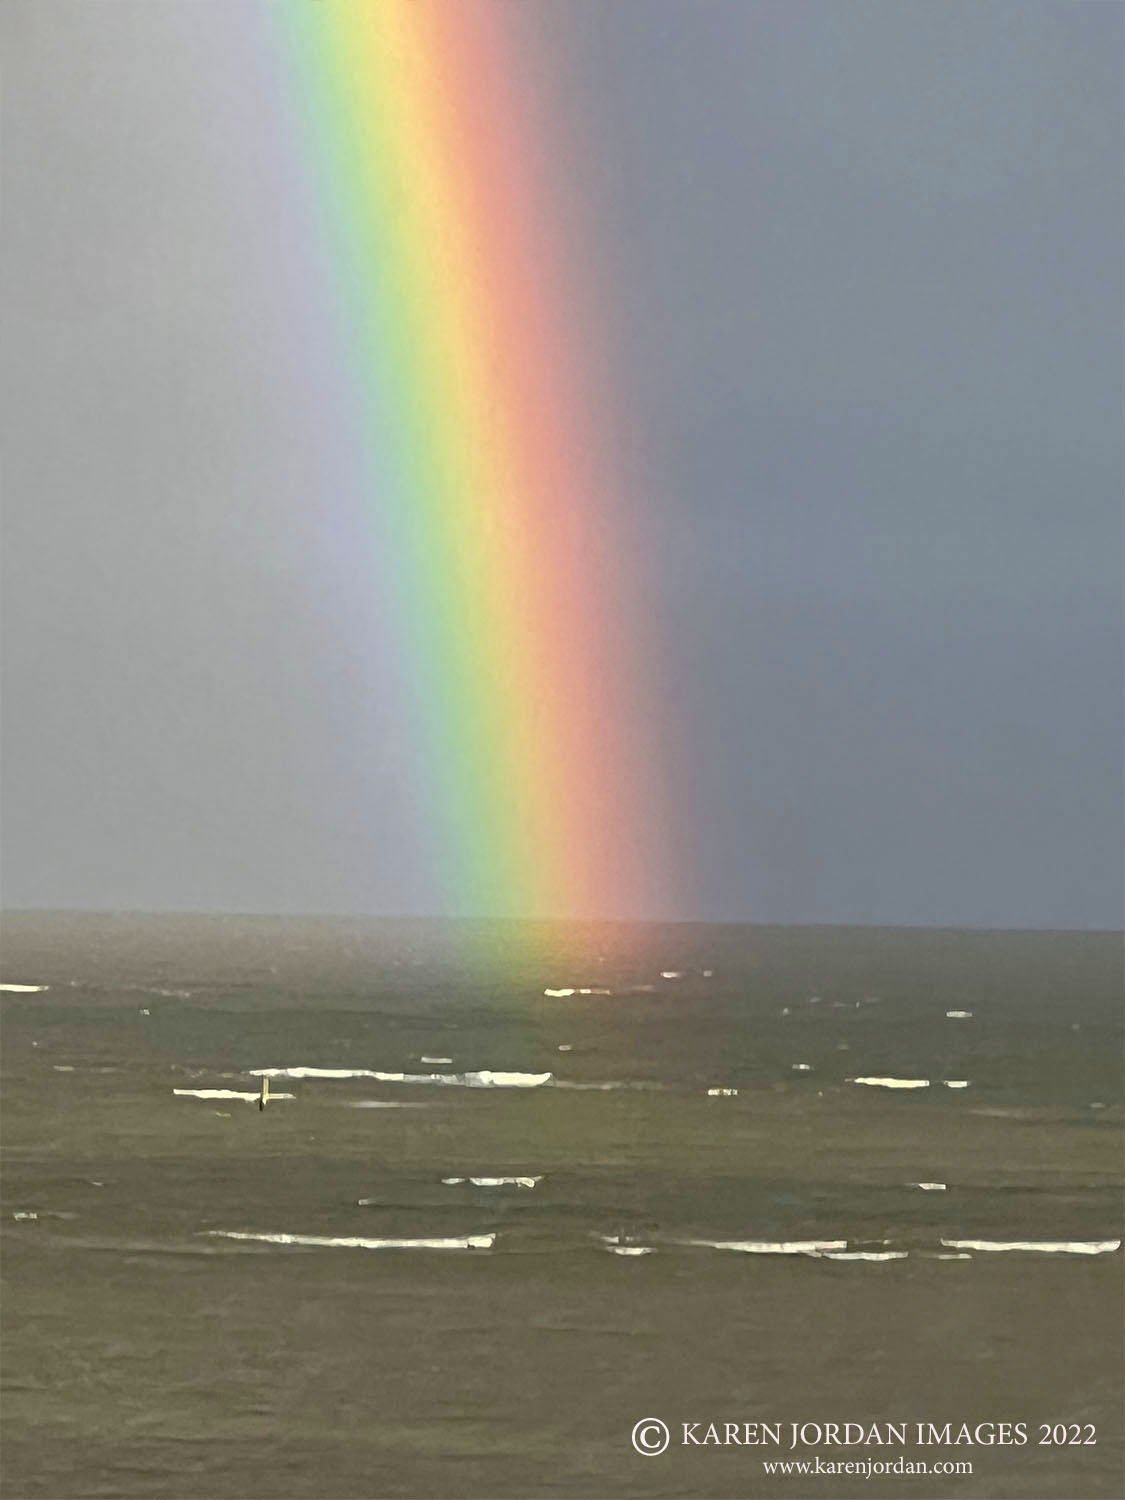 karen_jordan_picture_of_the_week_79_april_shower_brings_amazing_rainbow_after_storm_April_storm_colors_of_rainbow_Chesapeake_Bay_VA_copyright_karen_jordan_images-4web.jpg